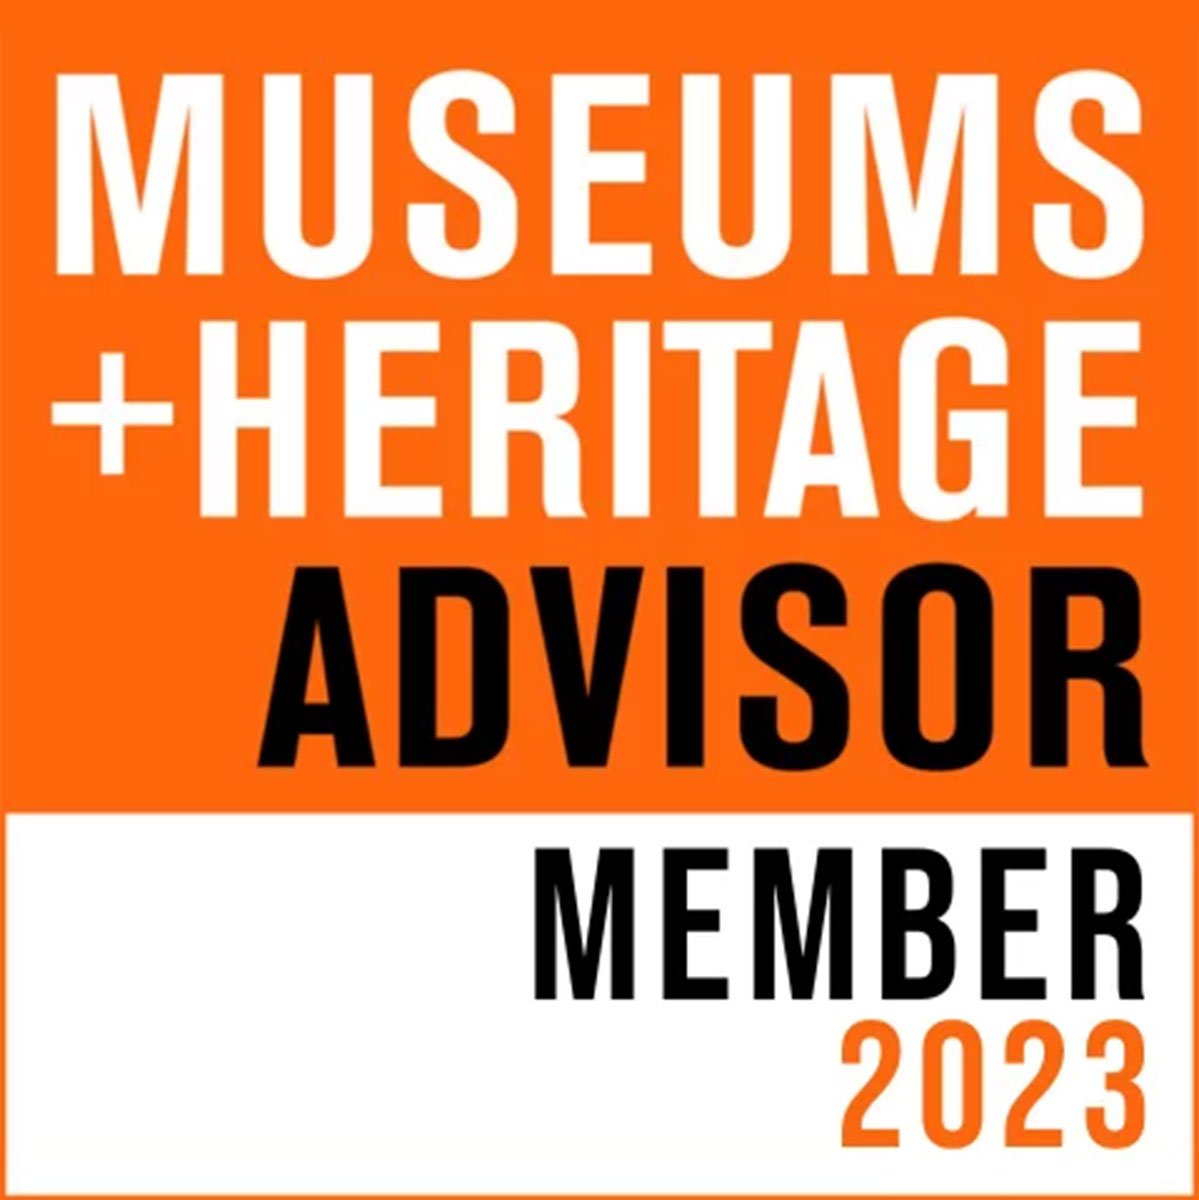 Museum and Heritage advisor member 2023 graphic